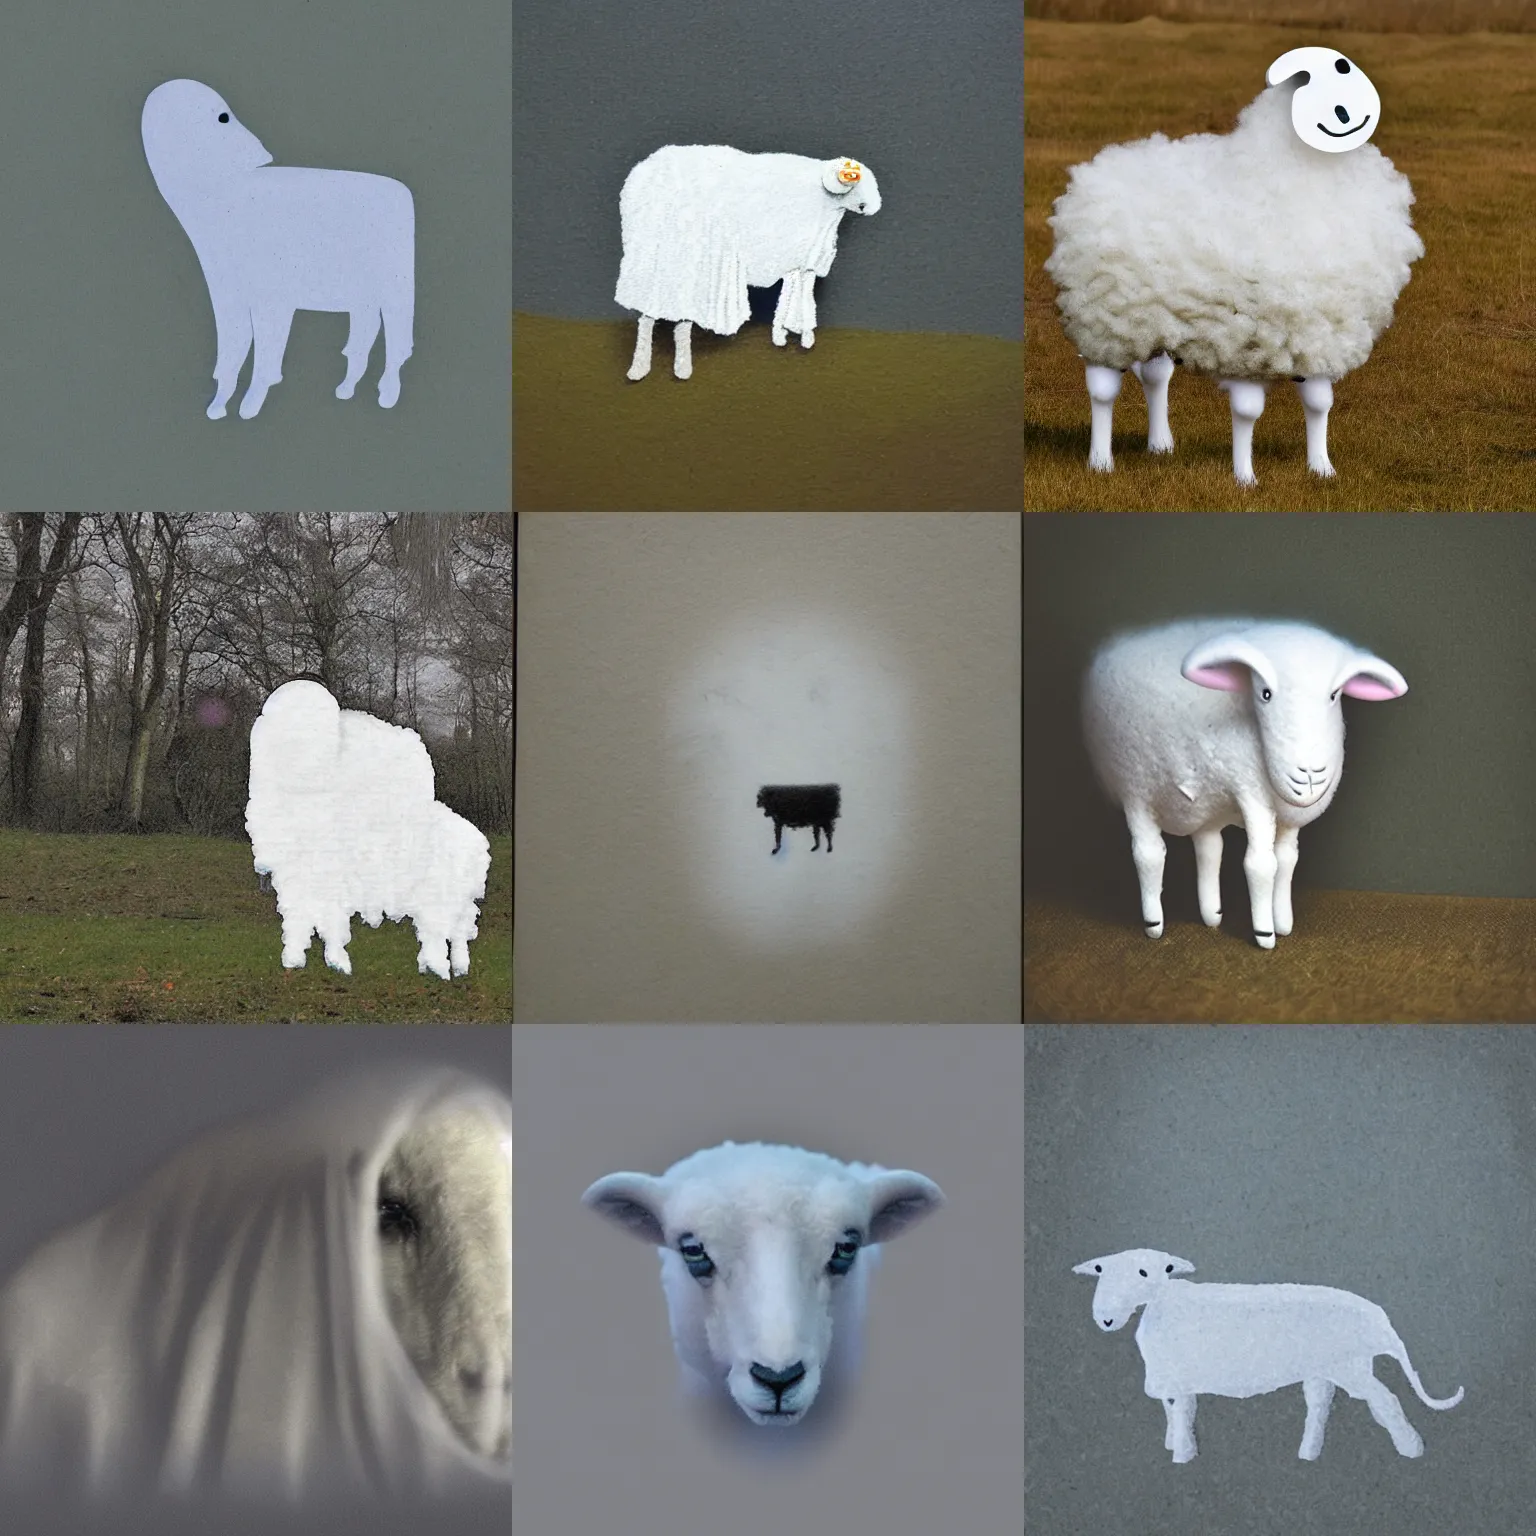 Prompt: A ghostly phantom sheep